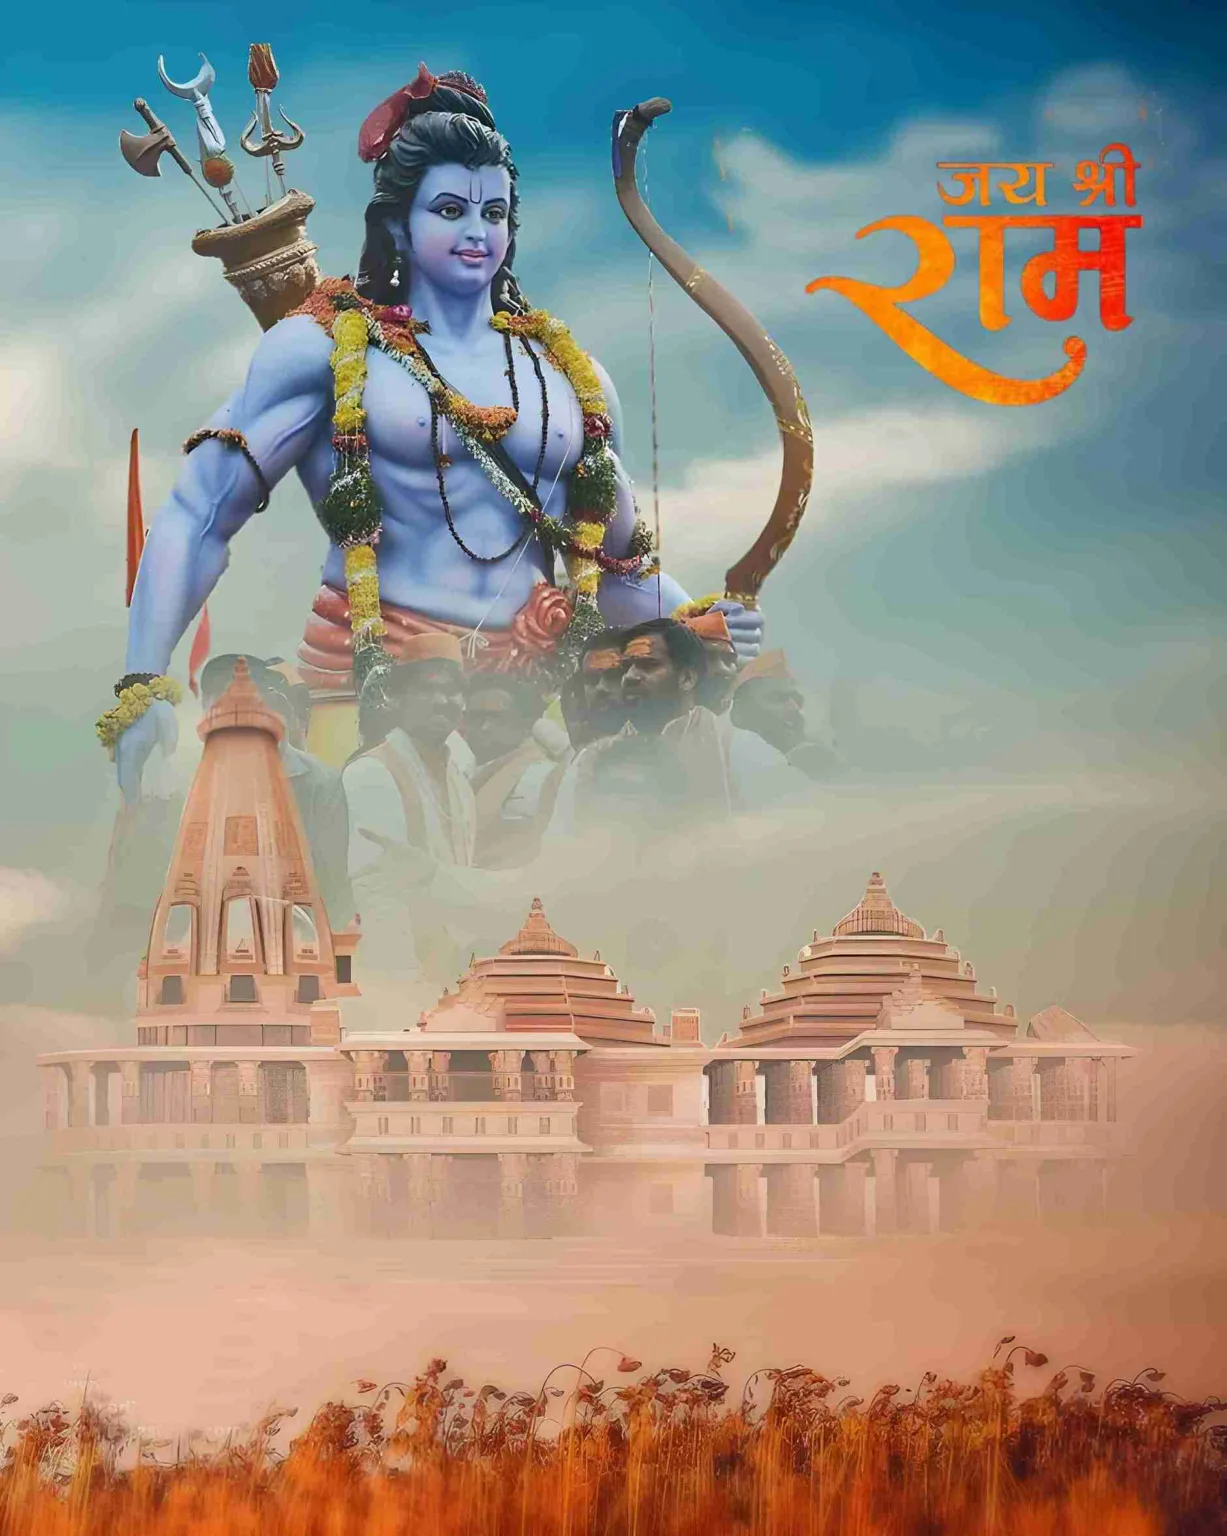 Ram Mandir Ayodhya Background Image for Editing